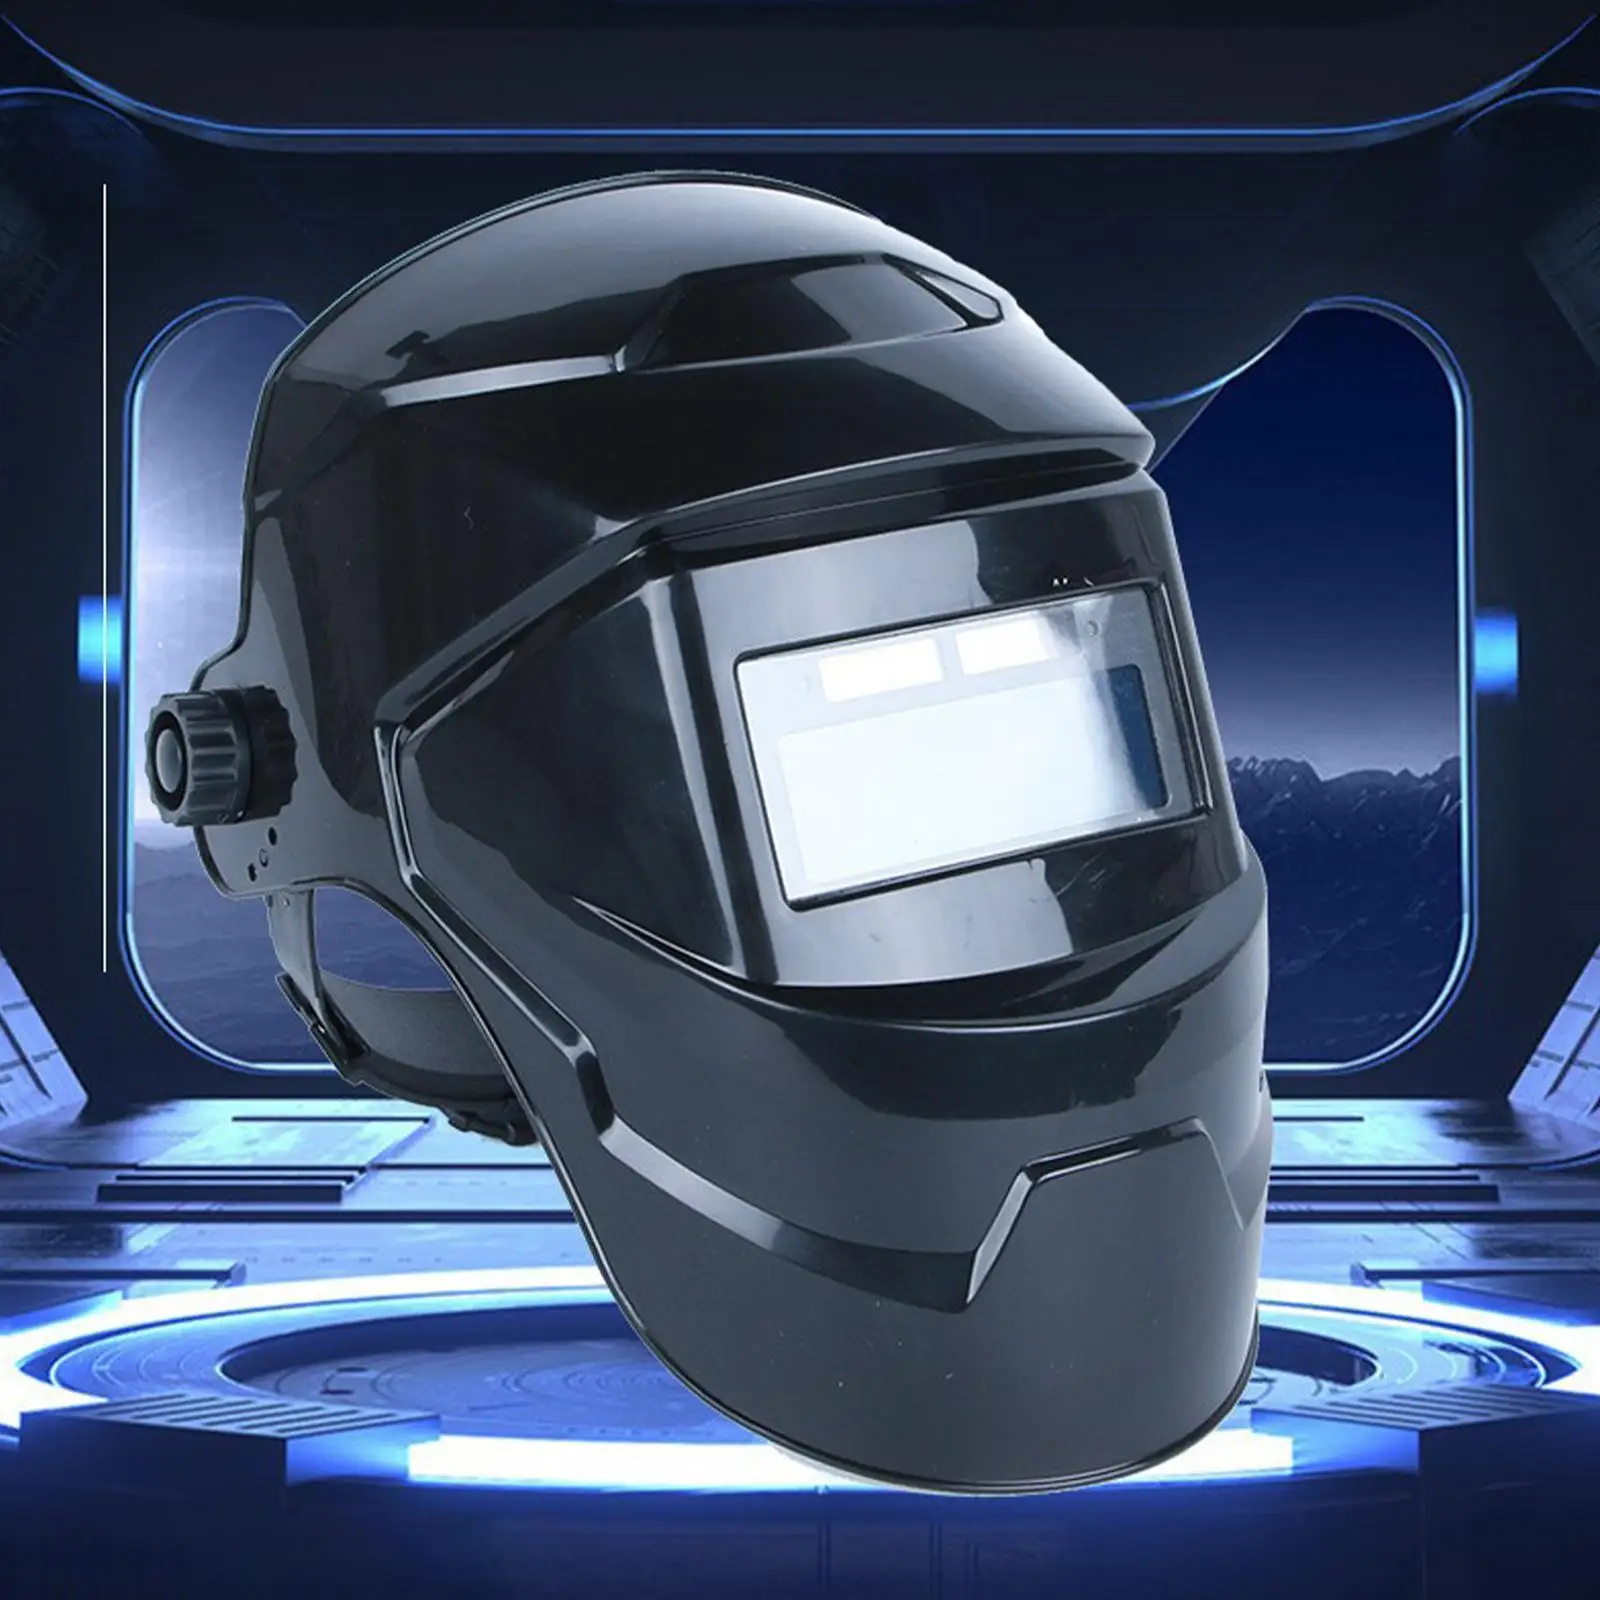 Large Viewing Auto Darkening Welding Helmet Lightweight Head Mounted Welding Helmet Welder Mask for TIG Mig ARC Grinding Plasma